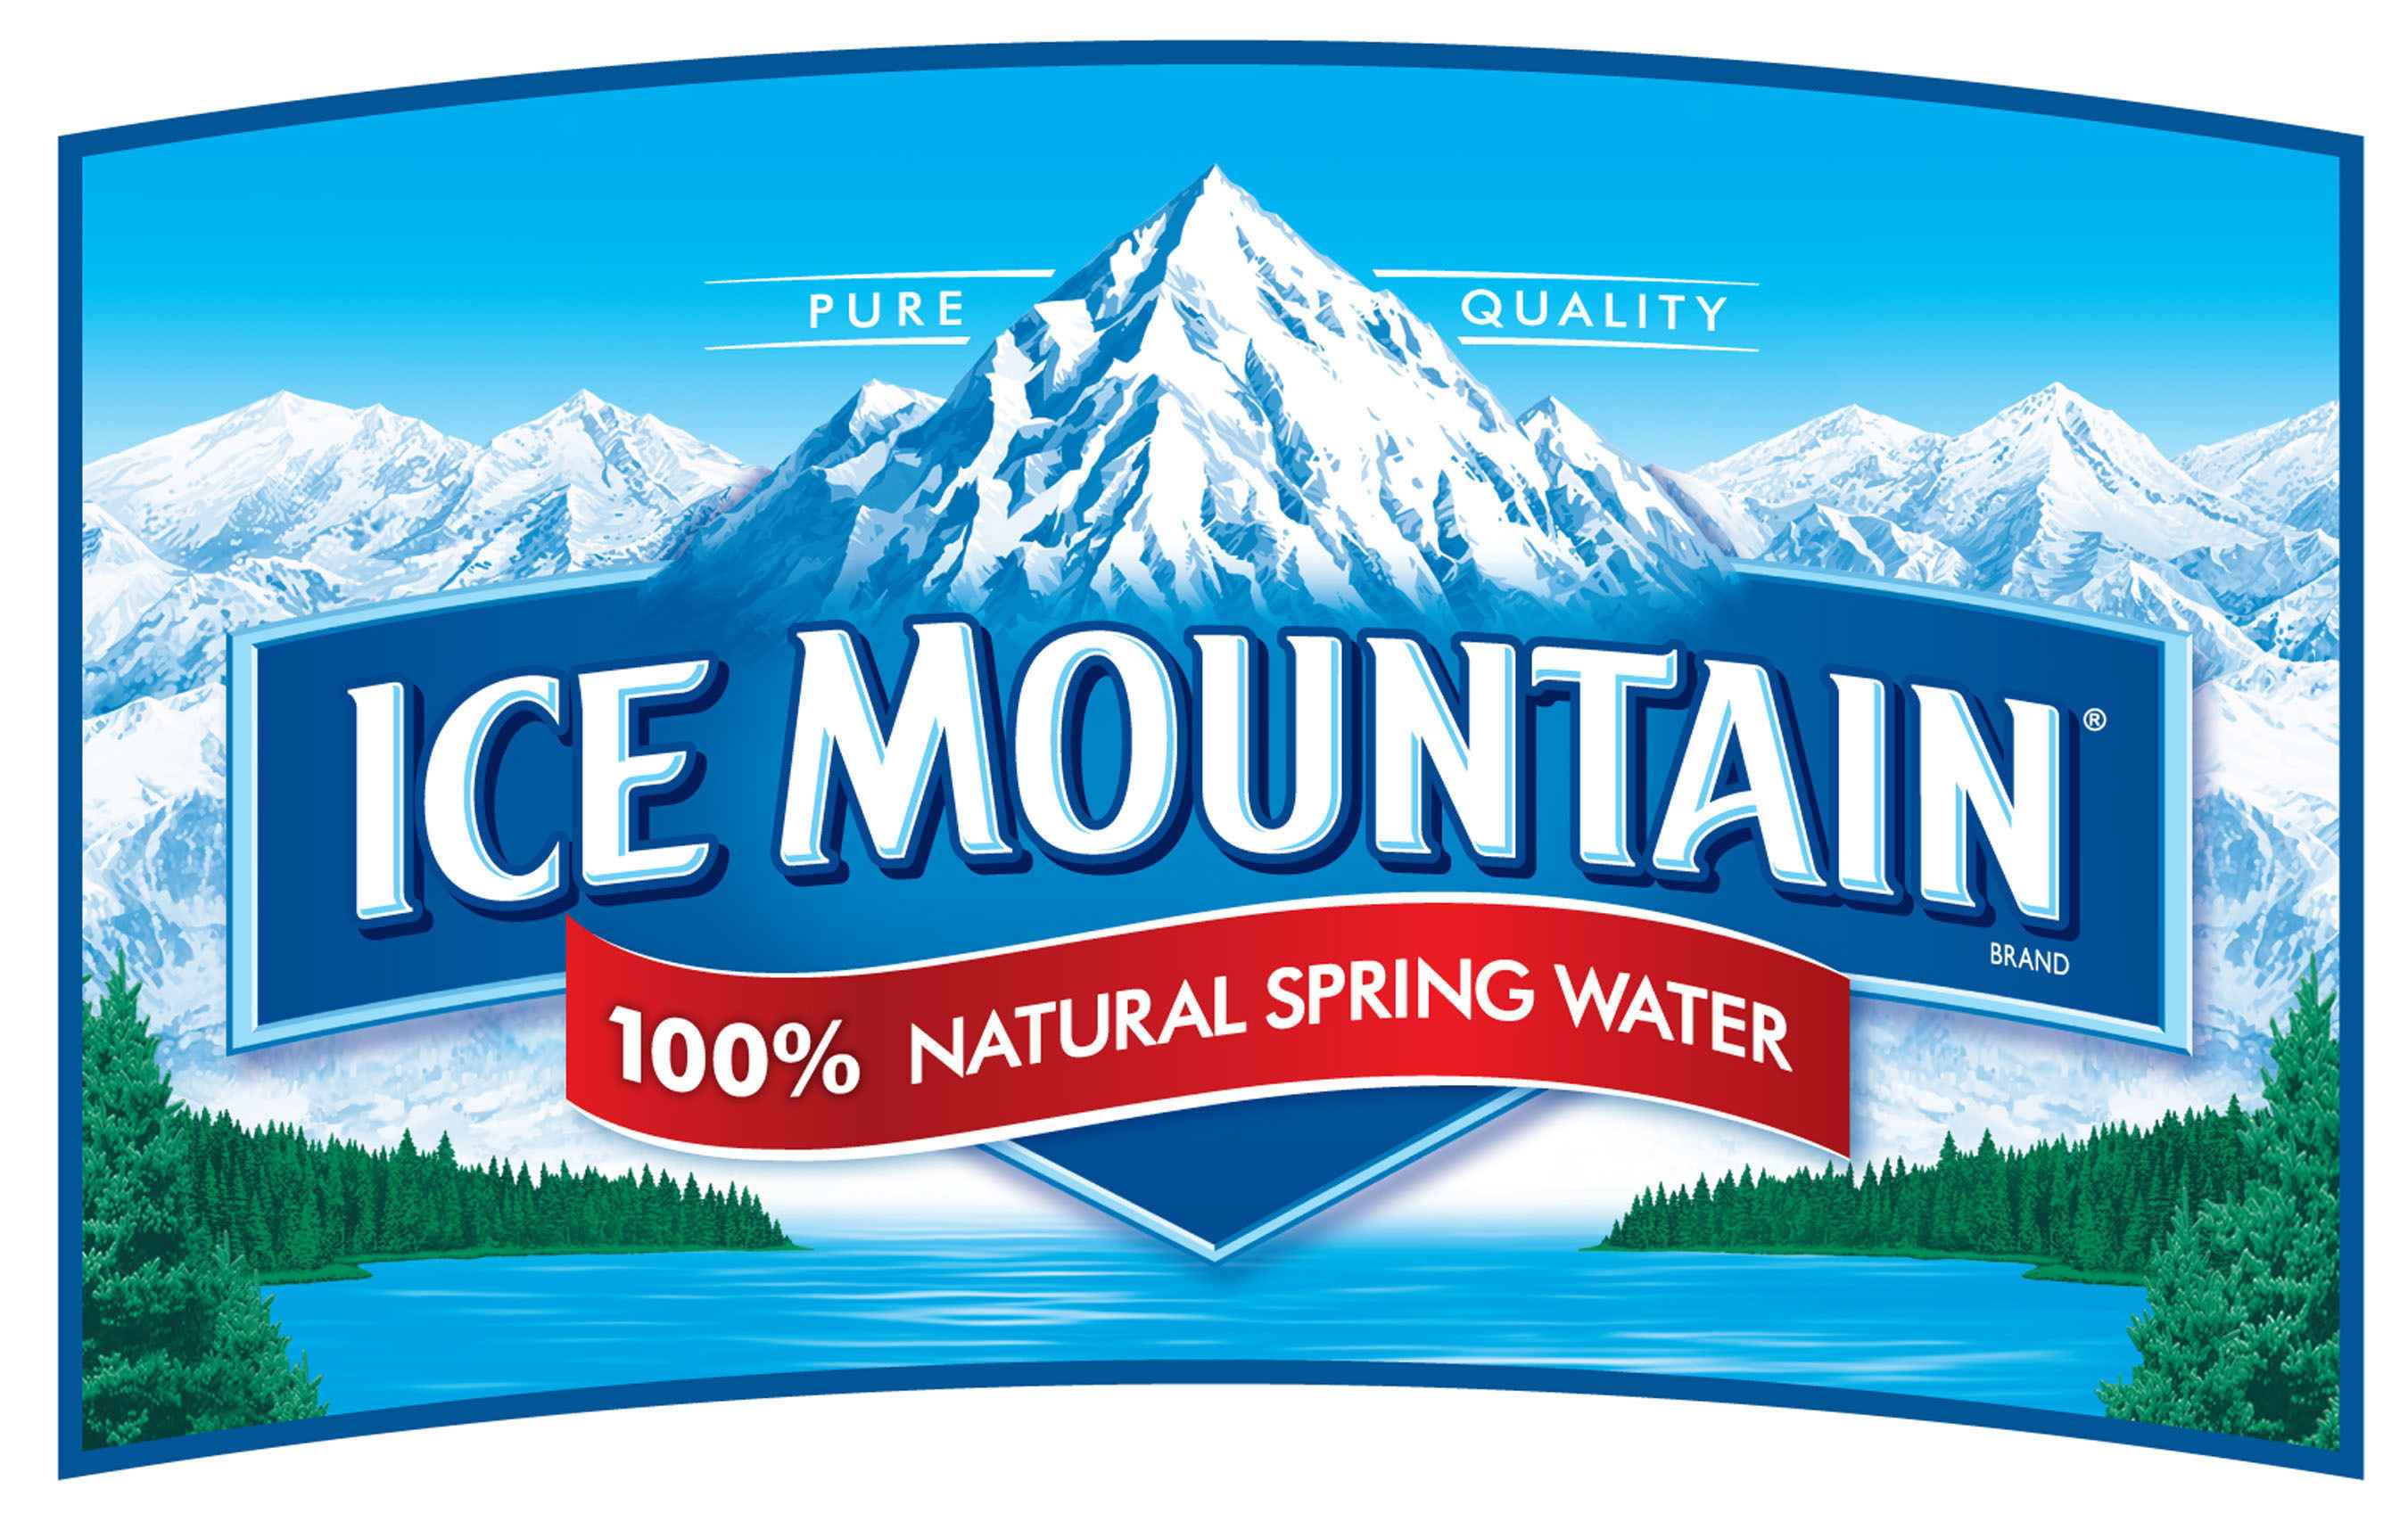 Iceice. Ice Mountain вода. Горы логотип. Вода и горы логотип. Ice лого.